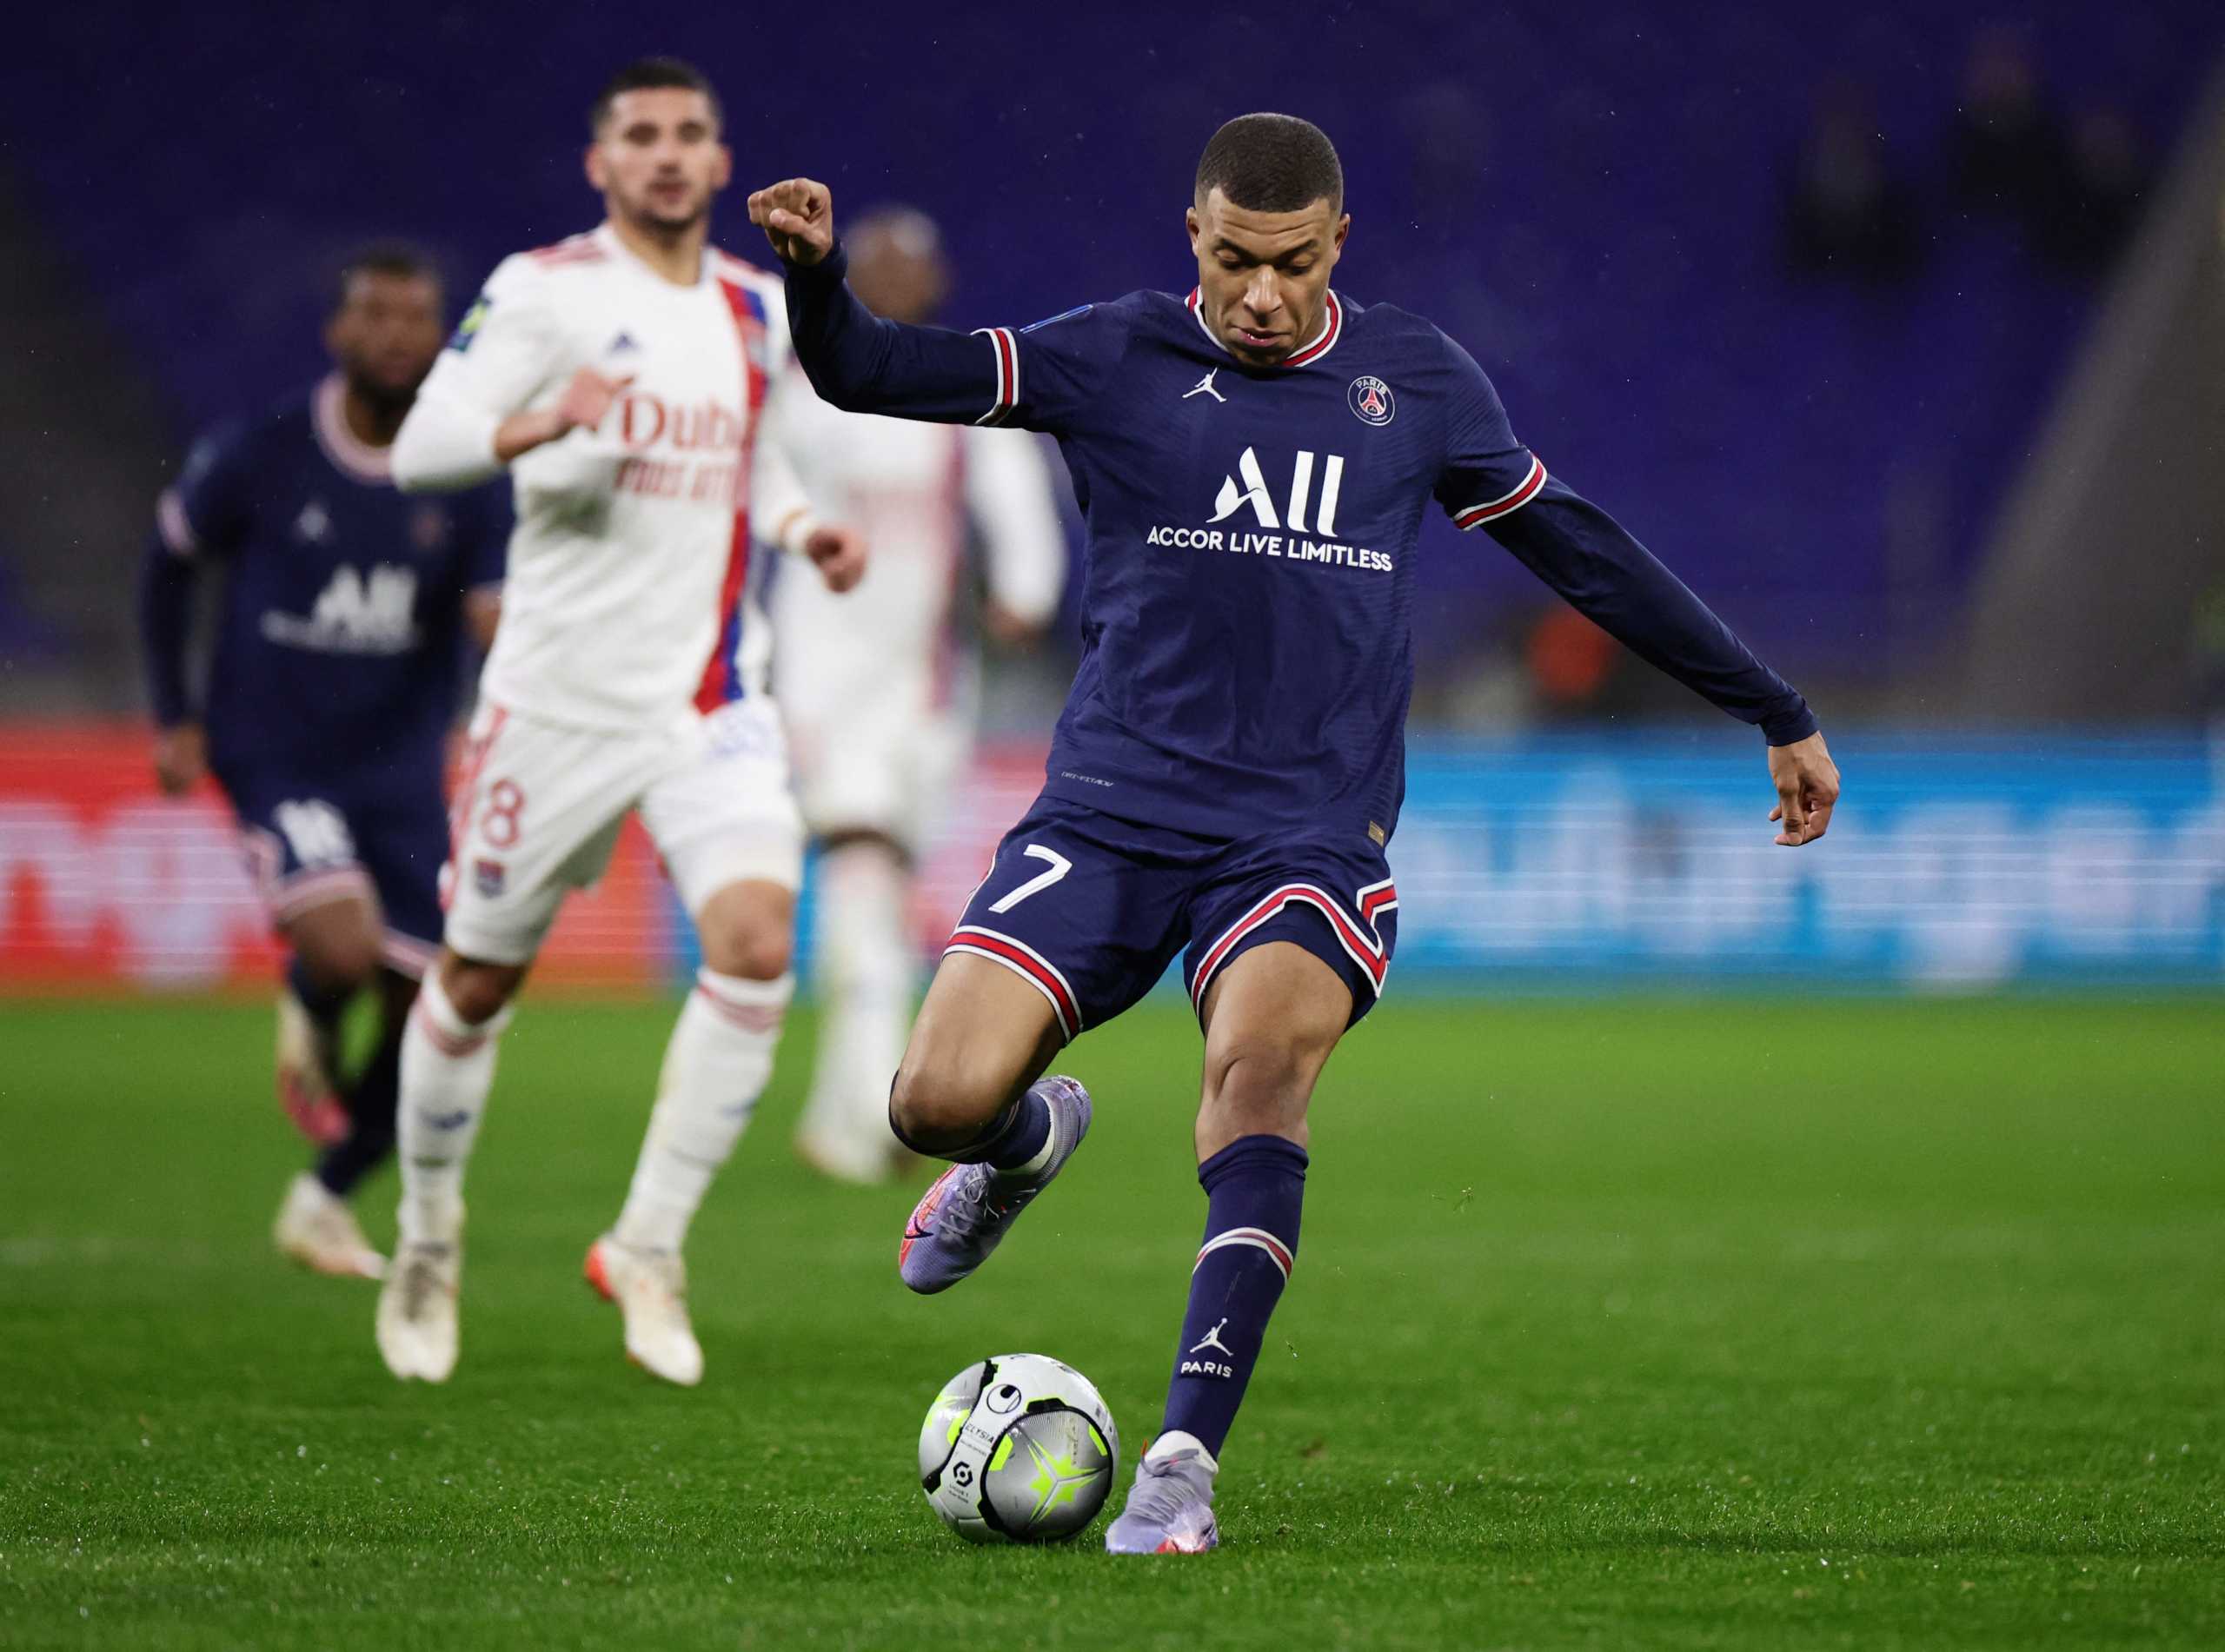 Ligue 1, Λιόν – Παρί Σεν Ζερμέν 1-1: «Έσωσαν» το βαθμό οι αποδεκατισμένοι Παριζιάνοι